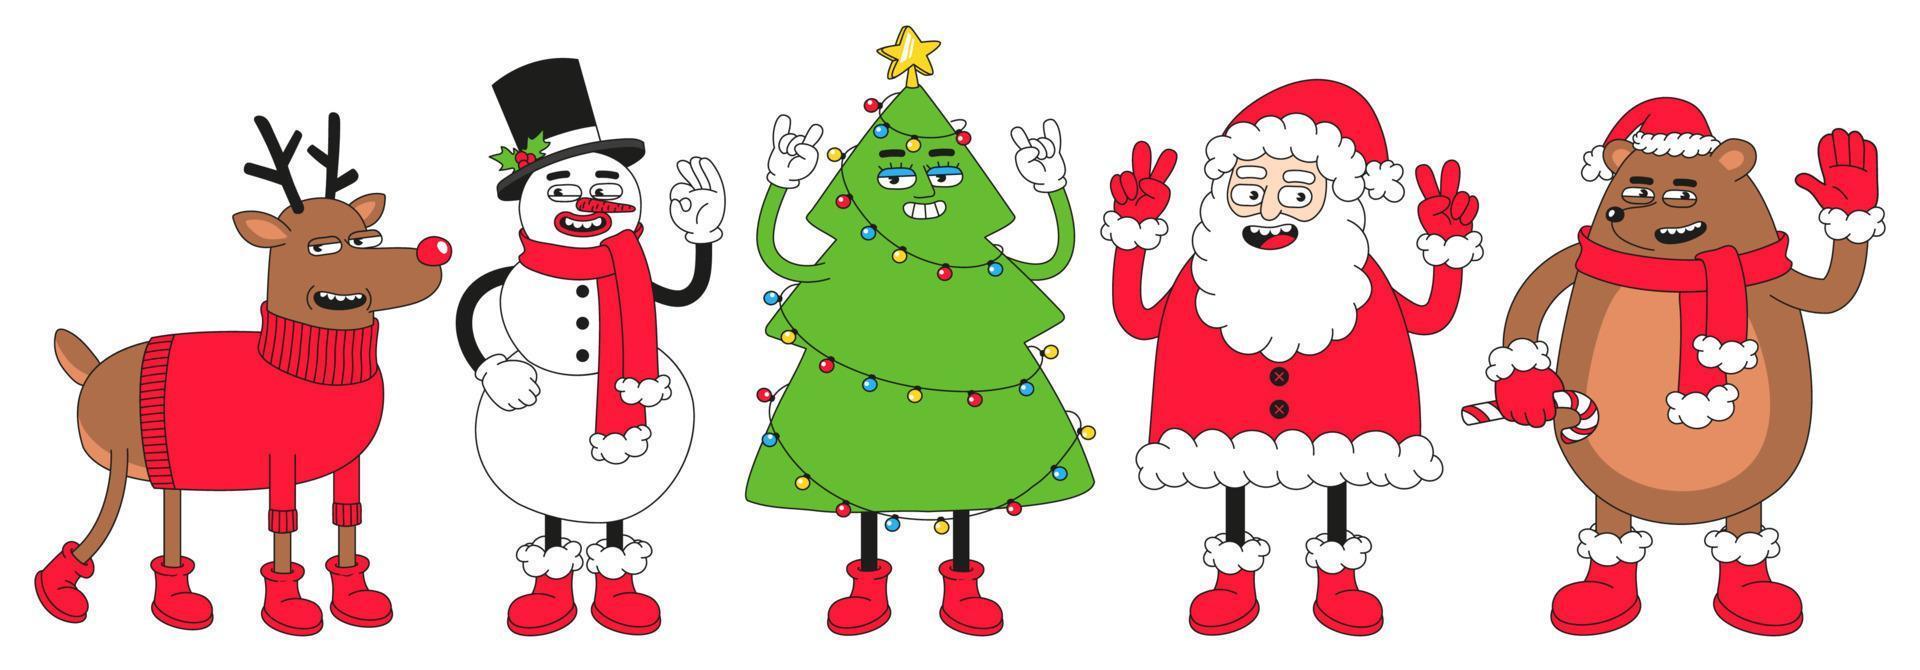 Christmas cartoon characters. Funny snowman, reindeer, Santa Claus, Christmas tree. vector